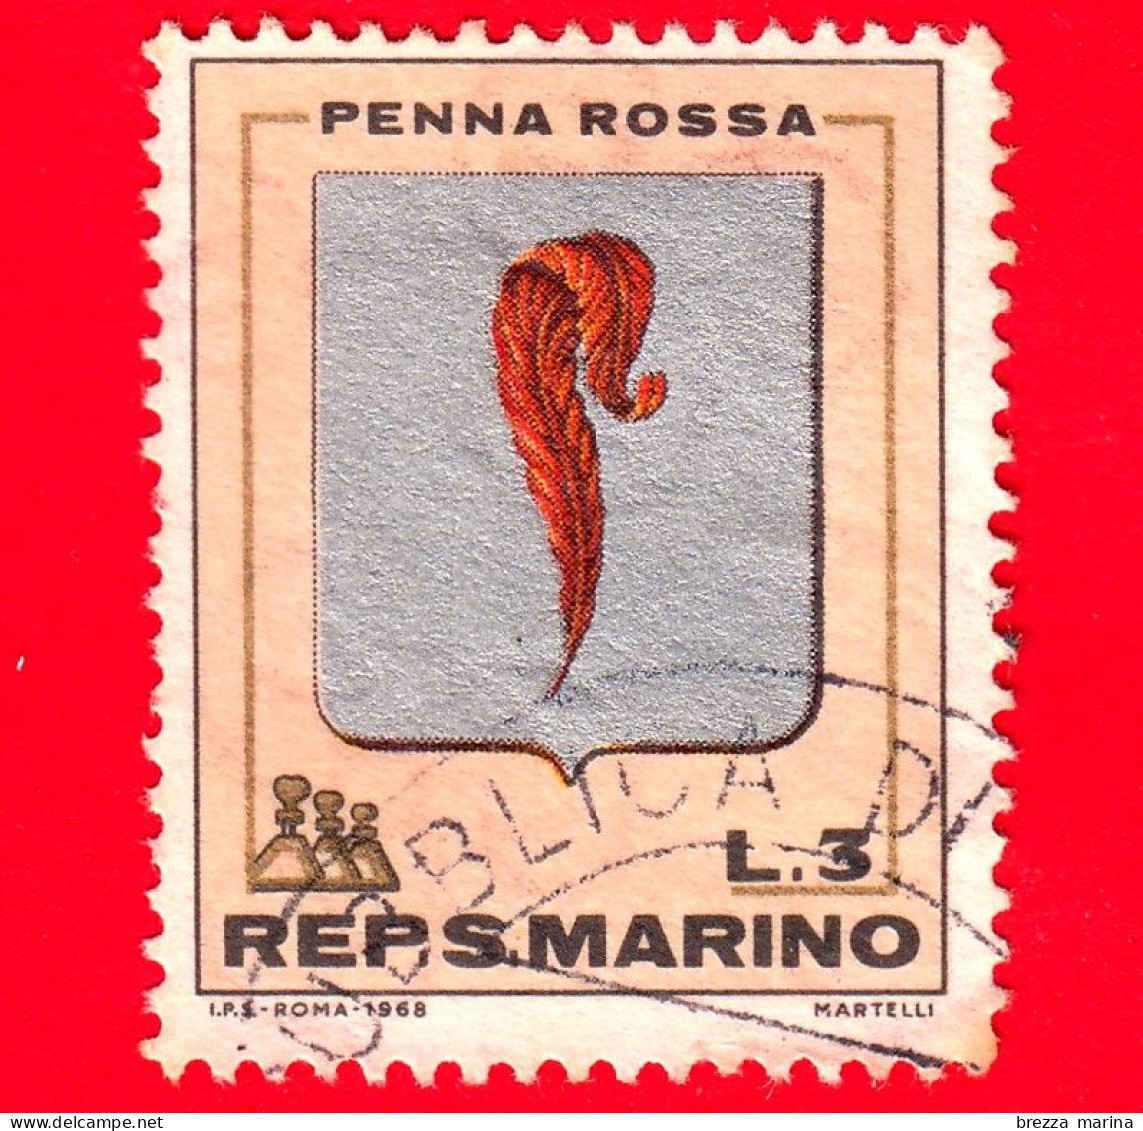 SAN MARINO - Usato - 1968 - Stemmi - Pennarossa - 3 L. - Used Stamps